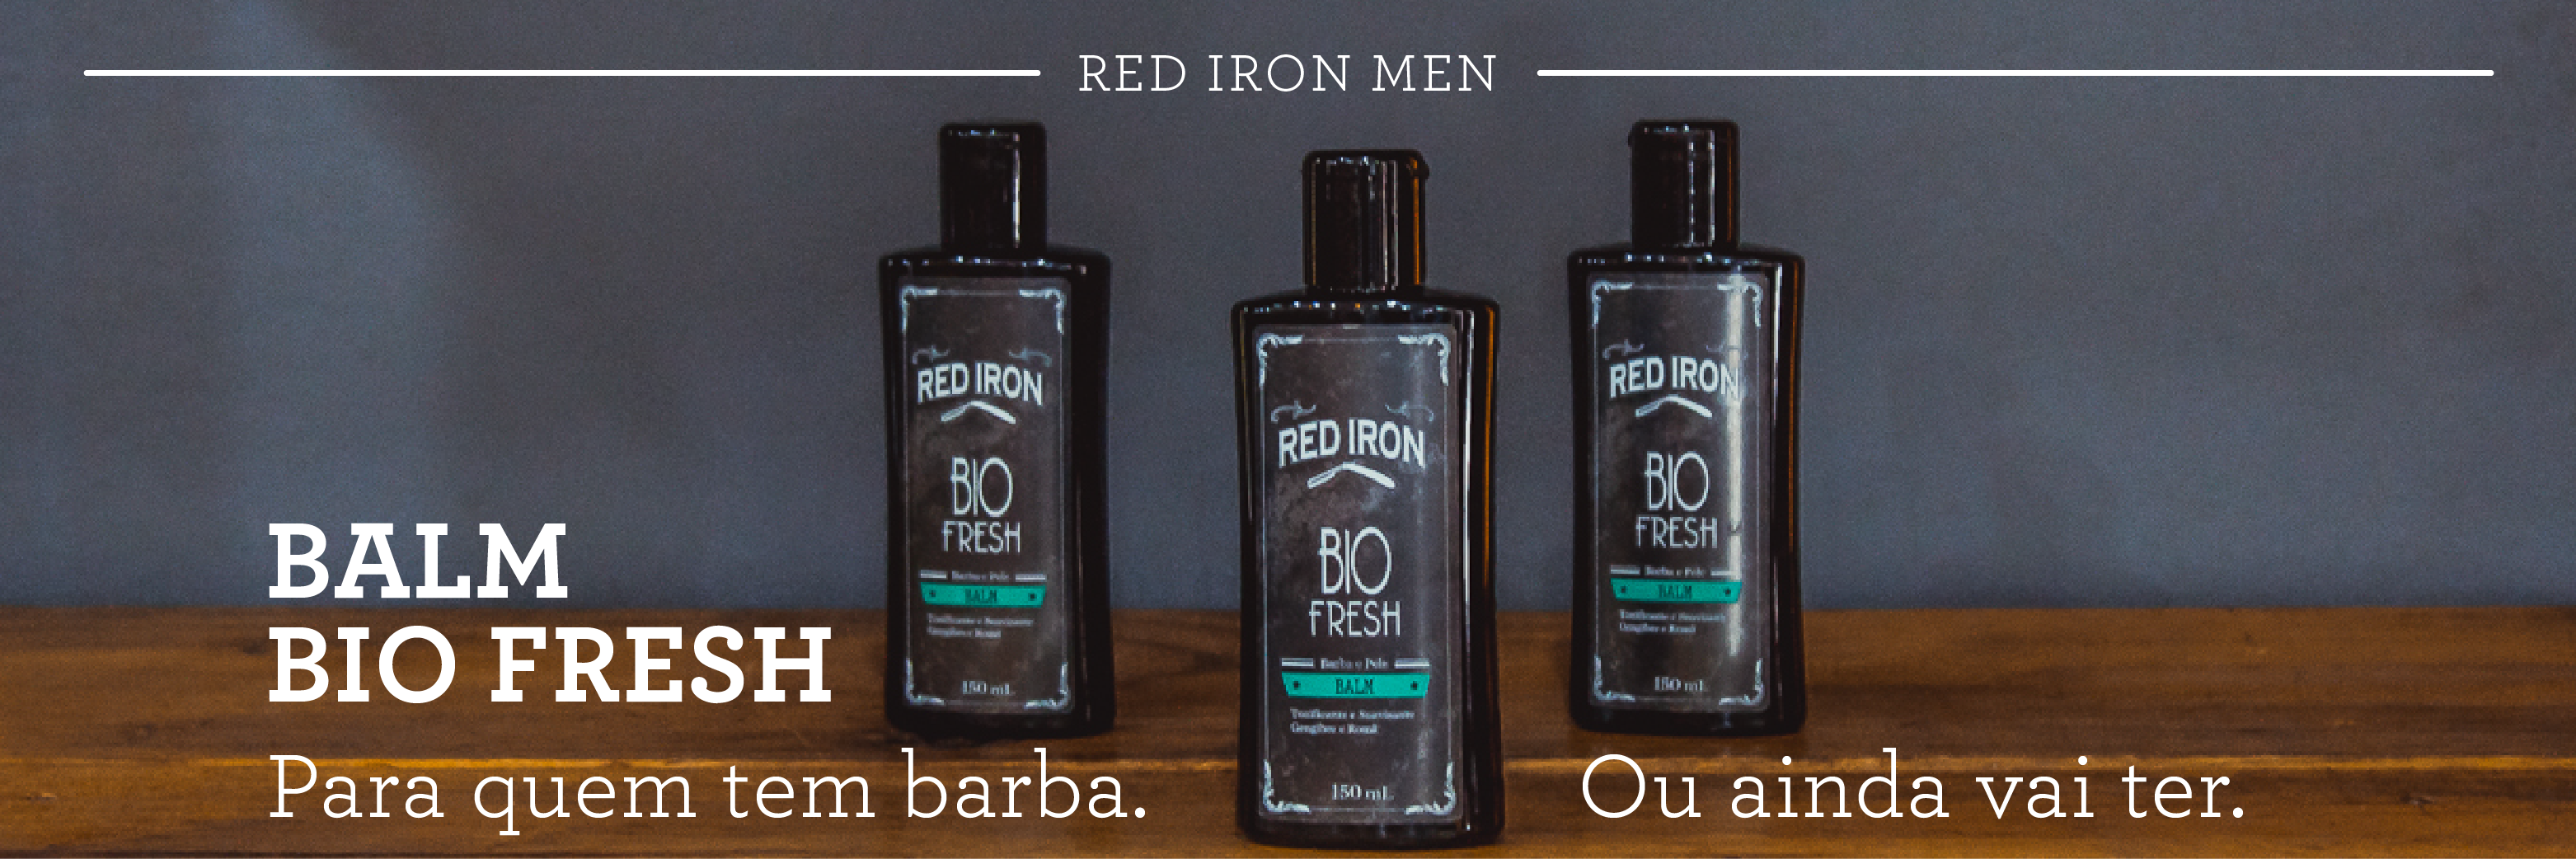 Red Iron Men